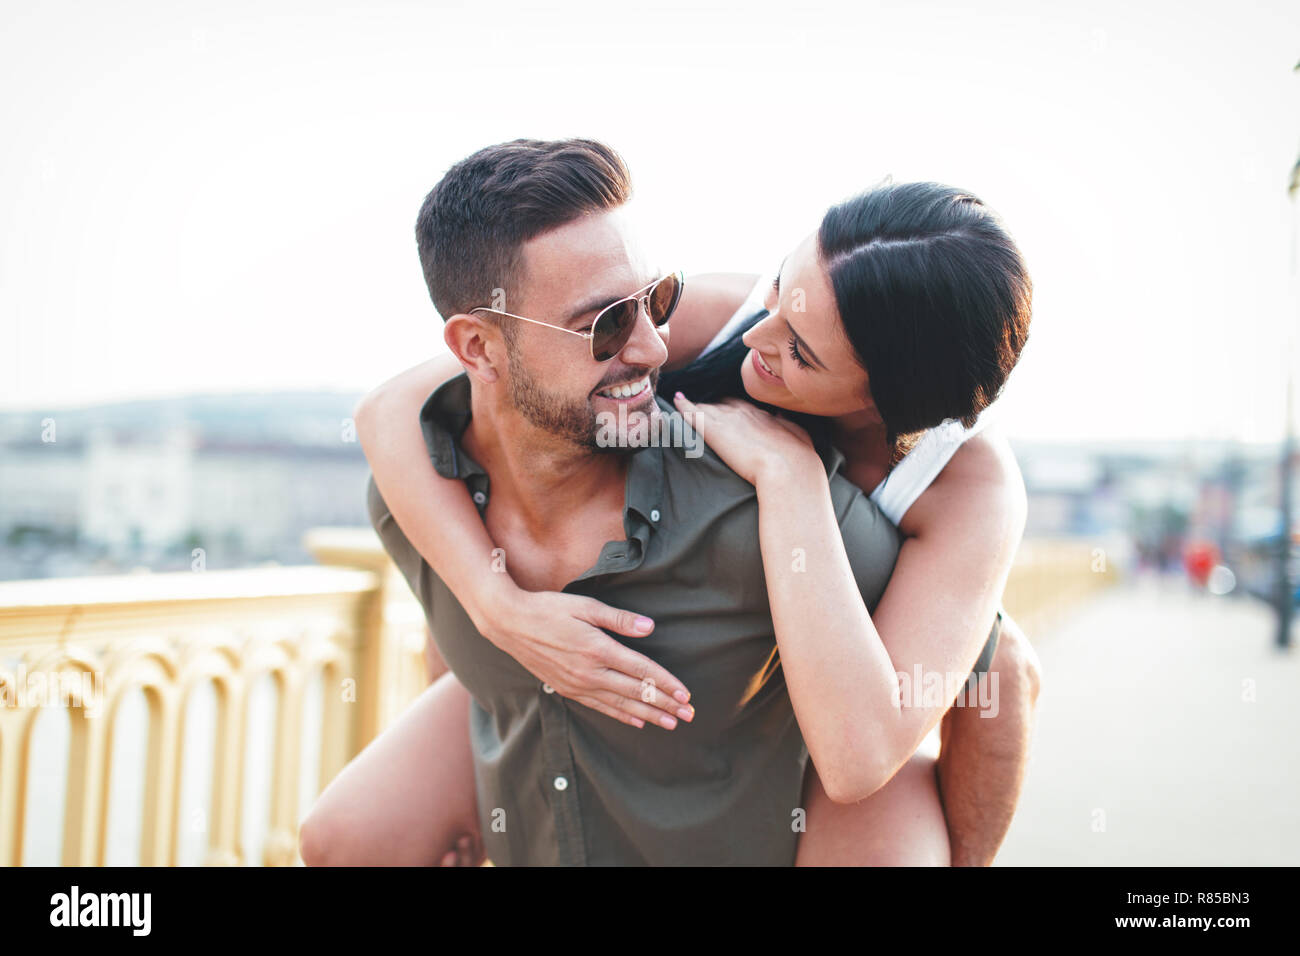 Carefree young caucasian urban couple doing piggyback at outdoors, happiness and joy Stock Photo